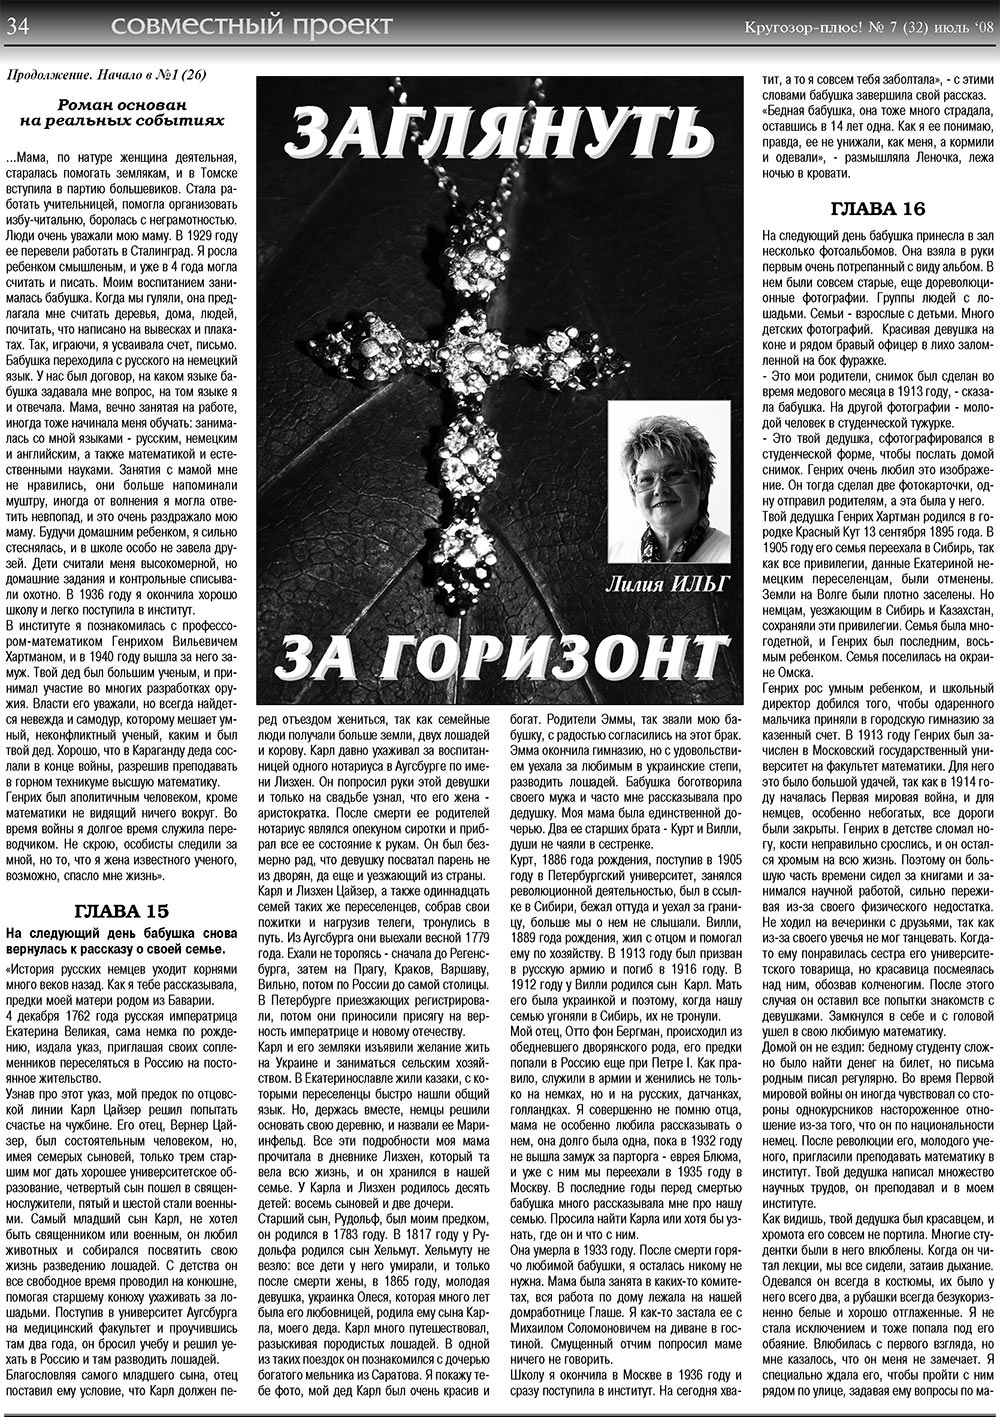 Кругозор плюс! (газета). 2008 год, номер 7, стр. 34